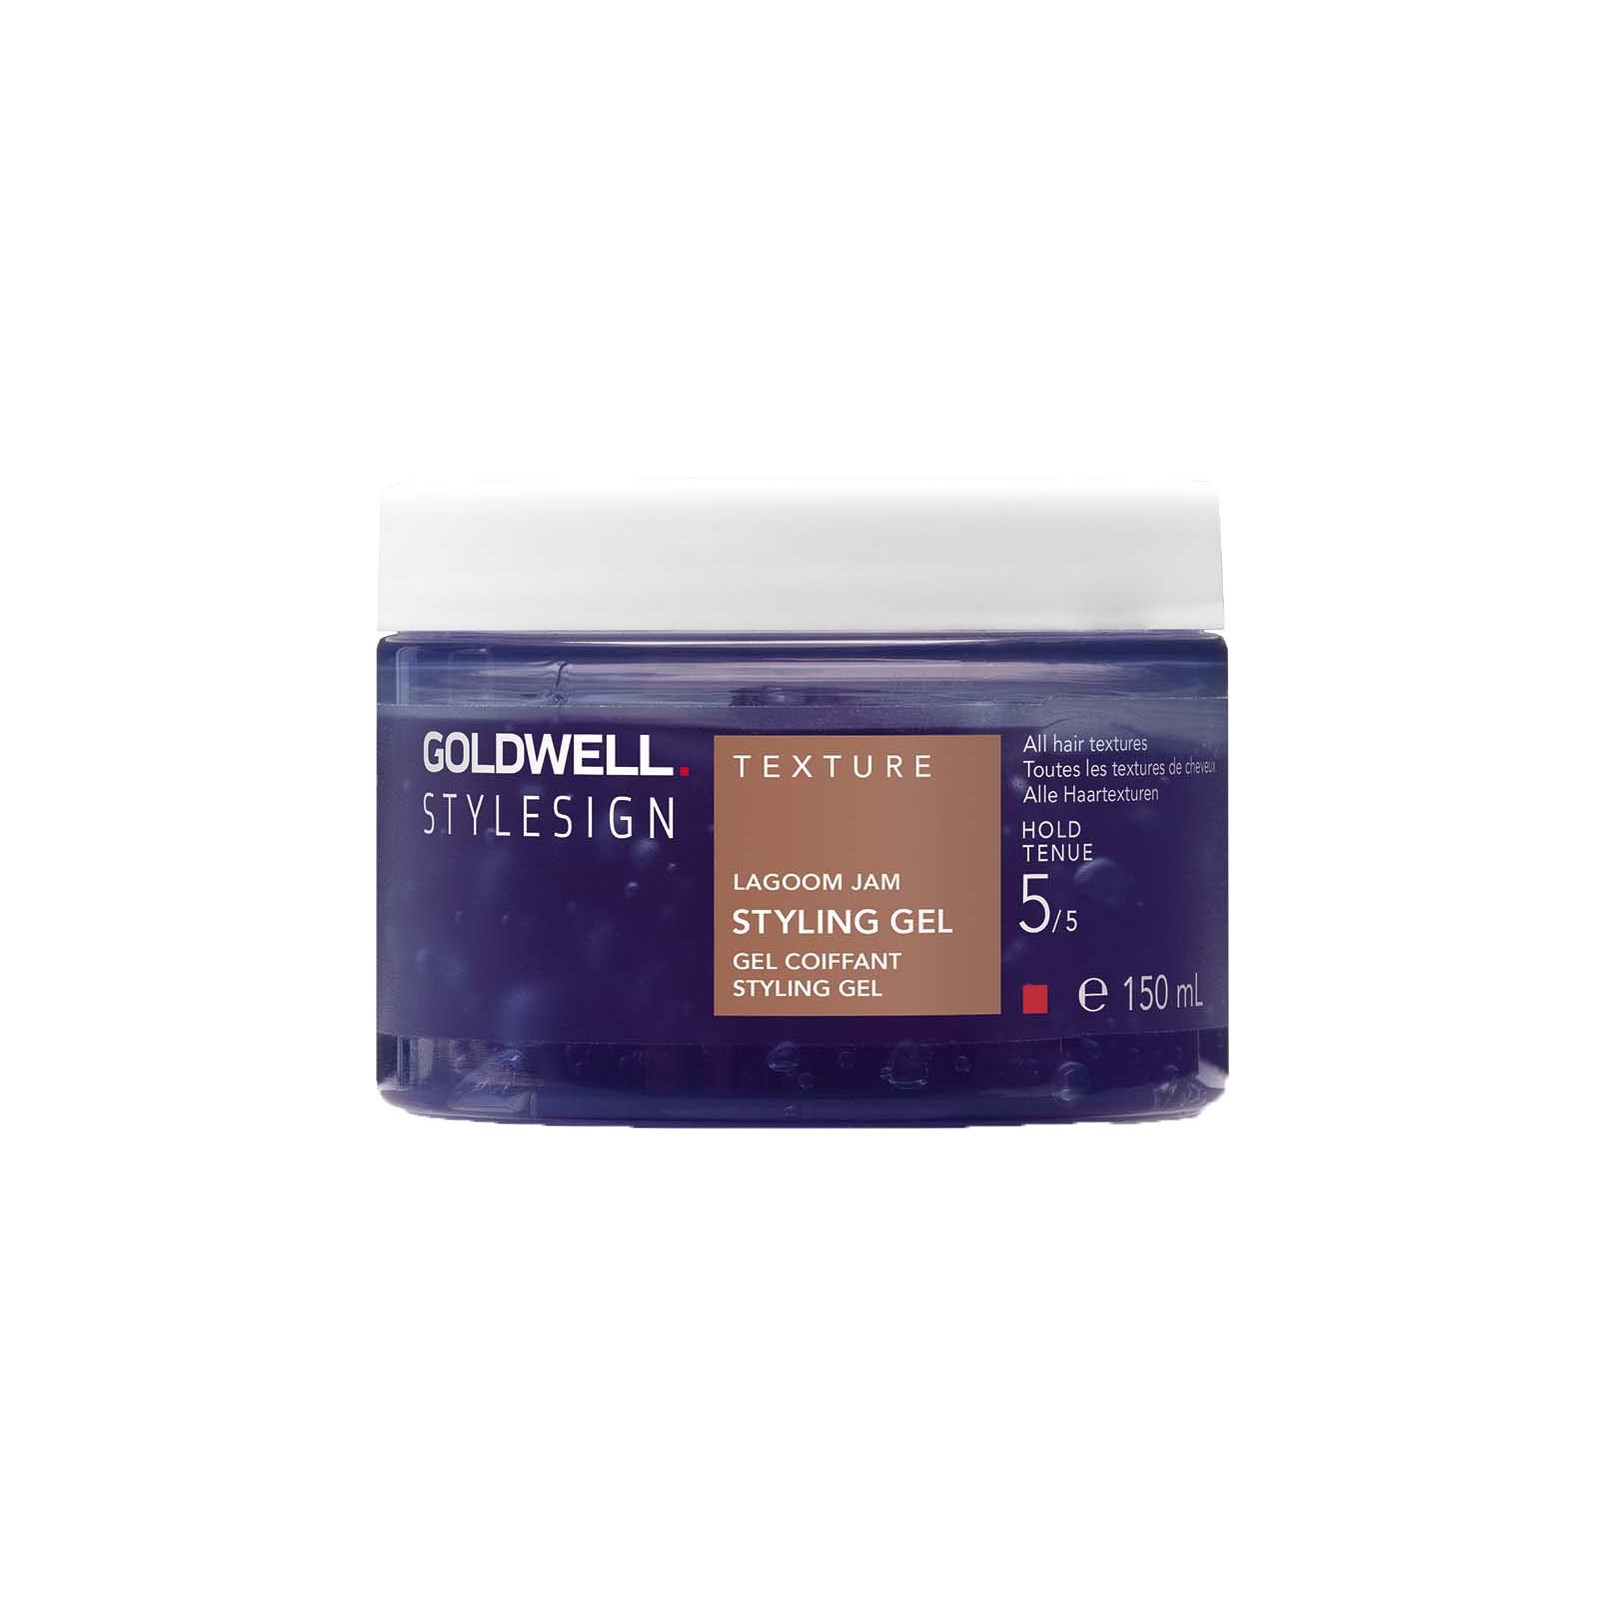 Läs mer om Goldwell StyleSign Texture Lagoom Jam Styling Gel 150 ml